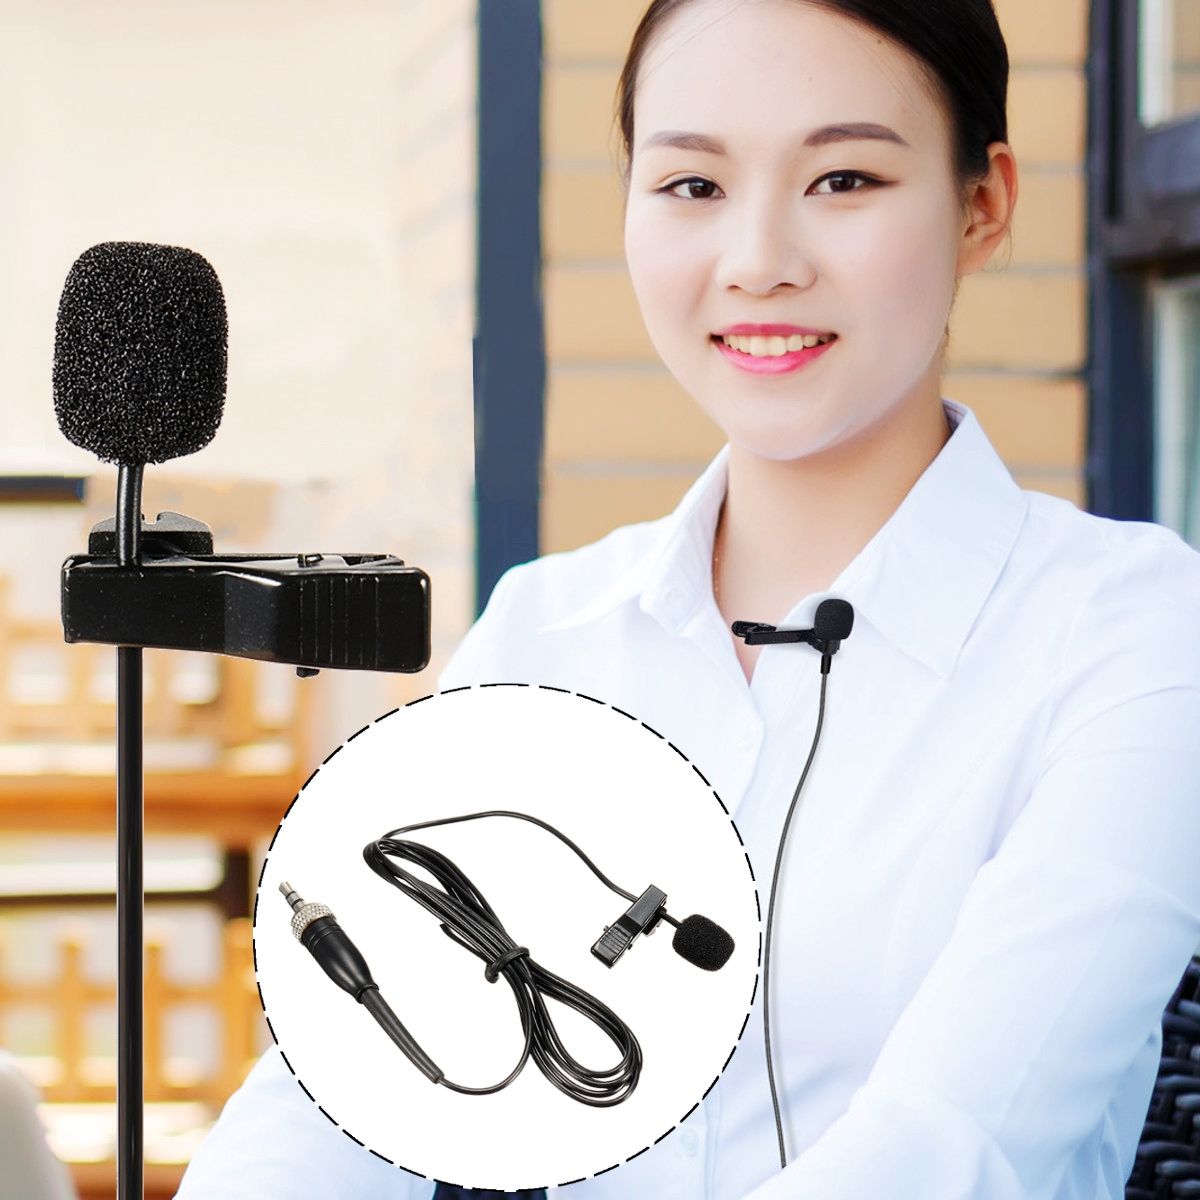 Tie-Clip-Lapel-Wireless-Lavalier-Microphone-Mic-for-Sennheiser-EW100-EW300-EW500-G2-G3-1430872